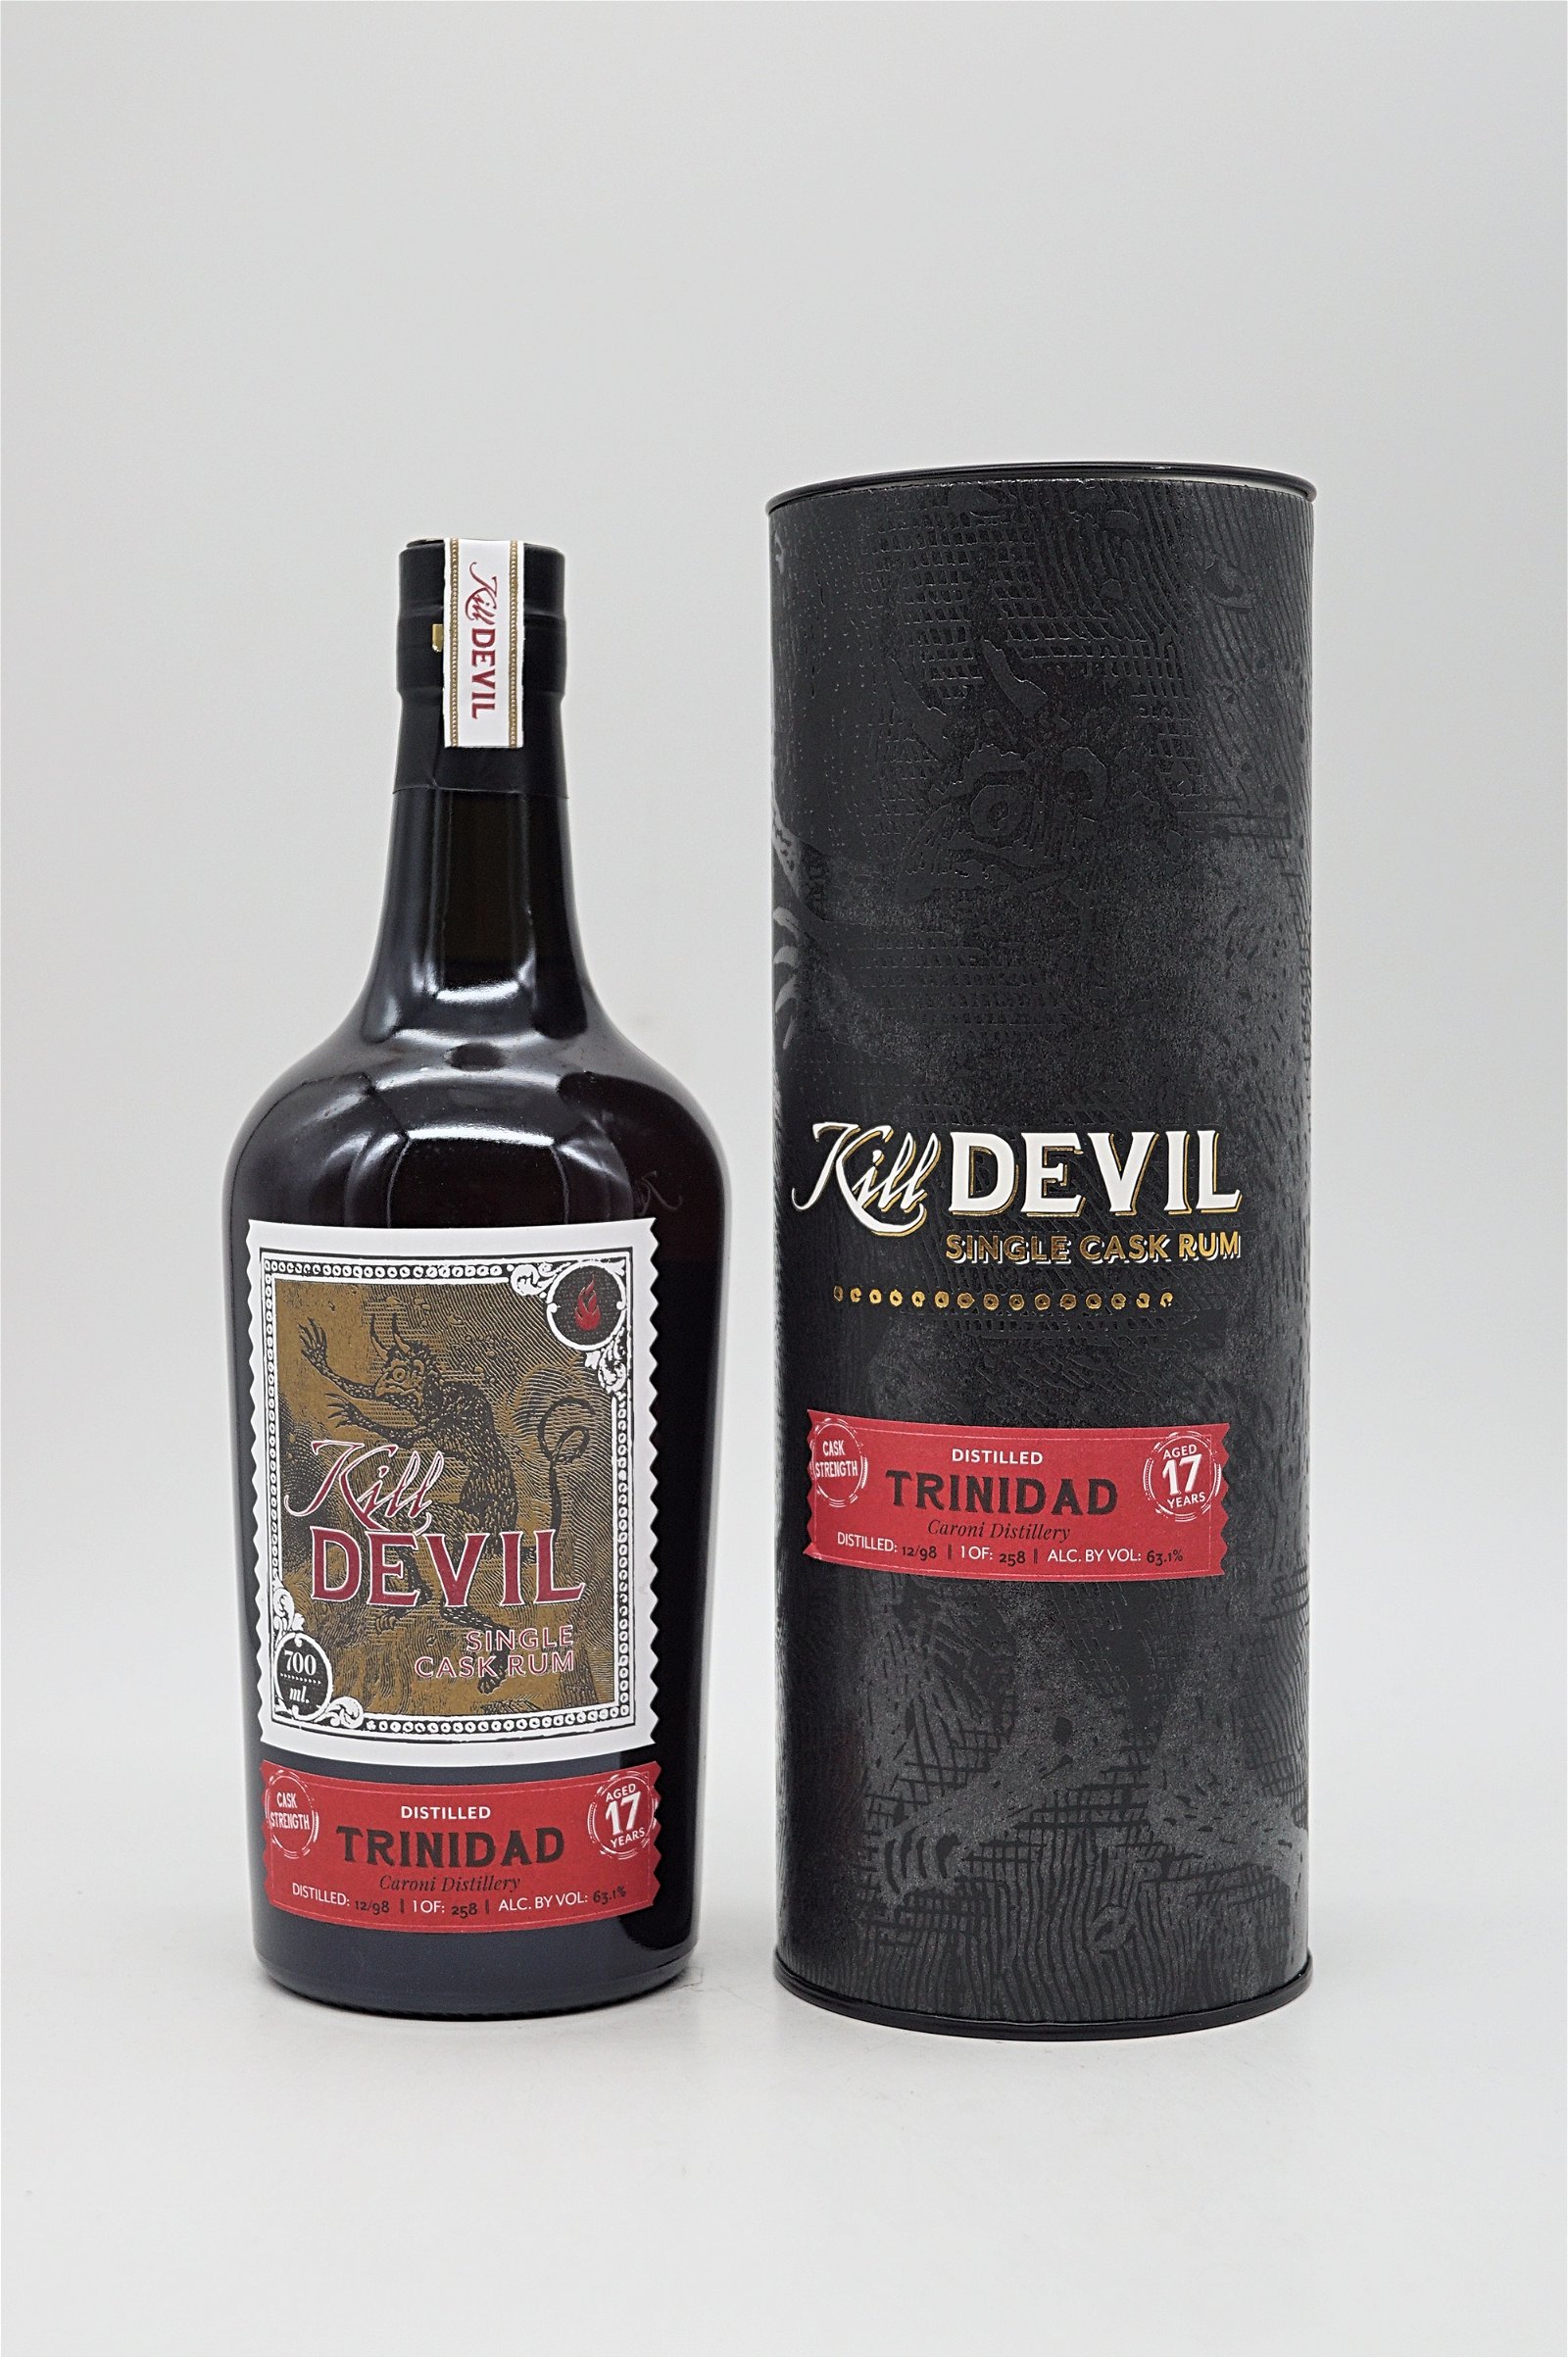 Kill Devil Rum Trinidad 17 Jahre Caroni Distillery 258 Fl.